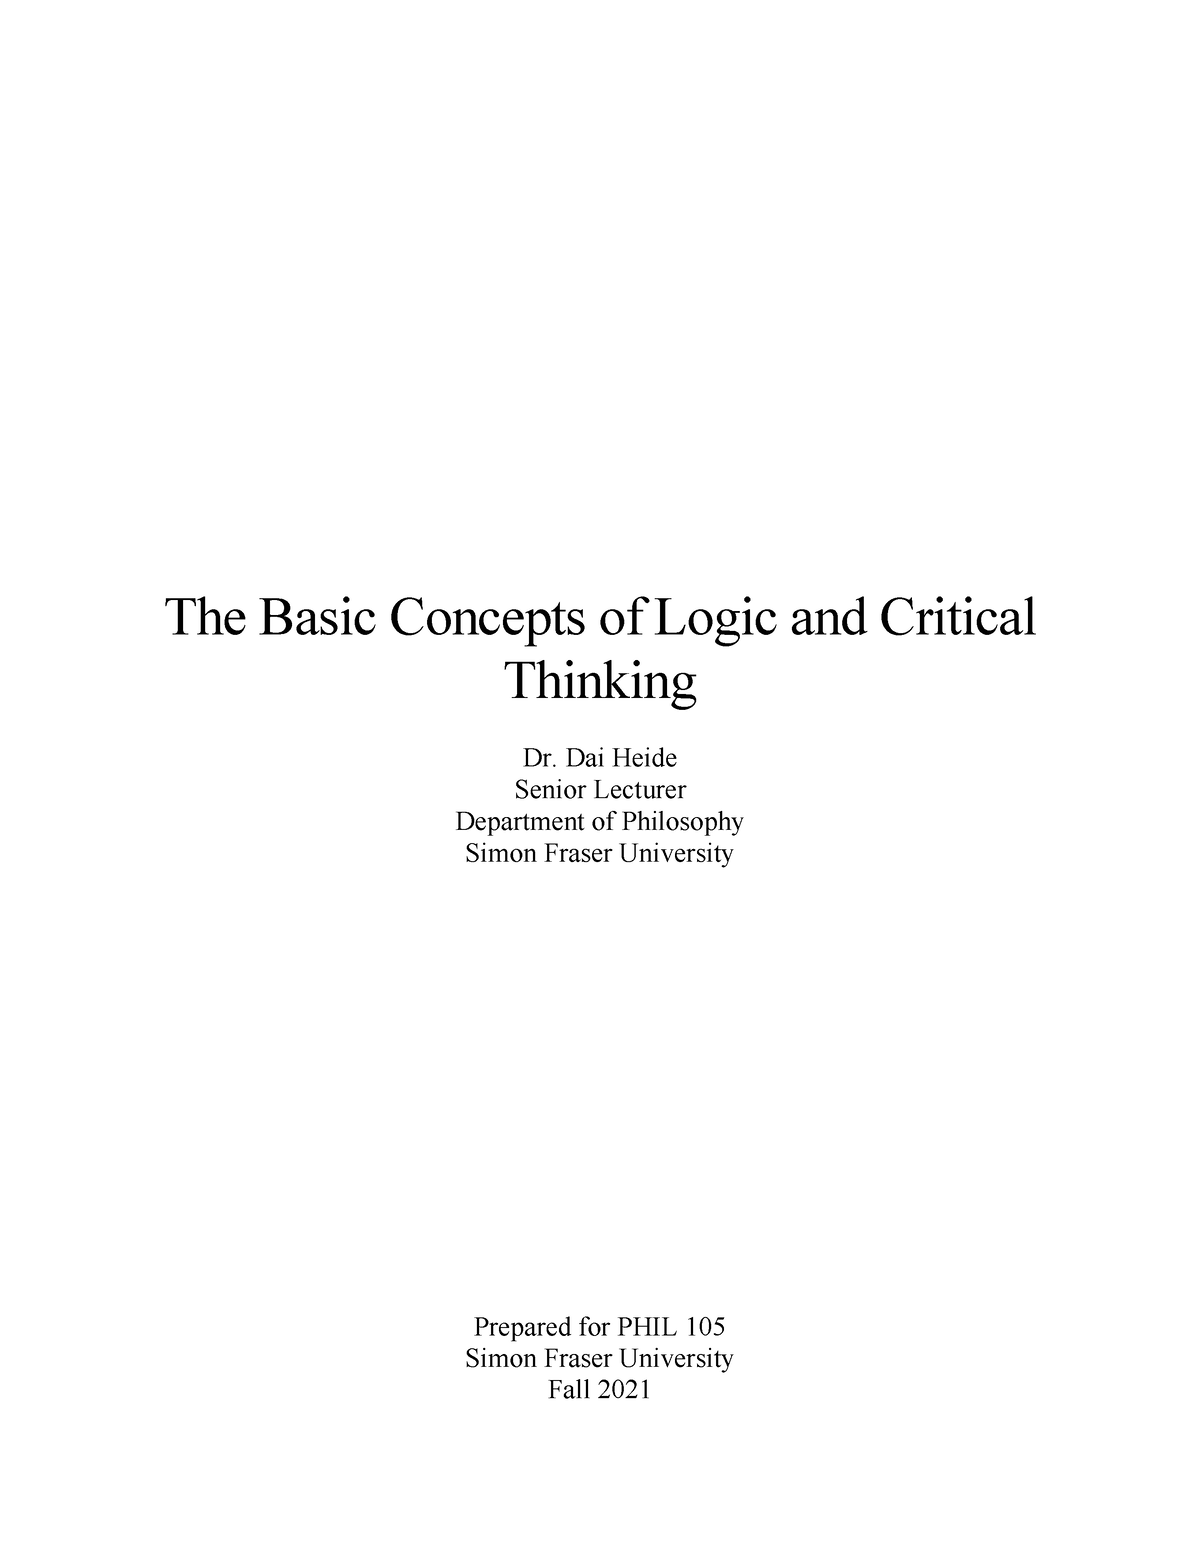 logic and critical thinking exam pdf